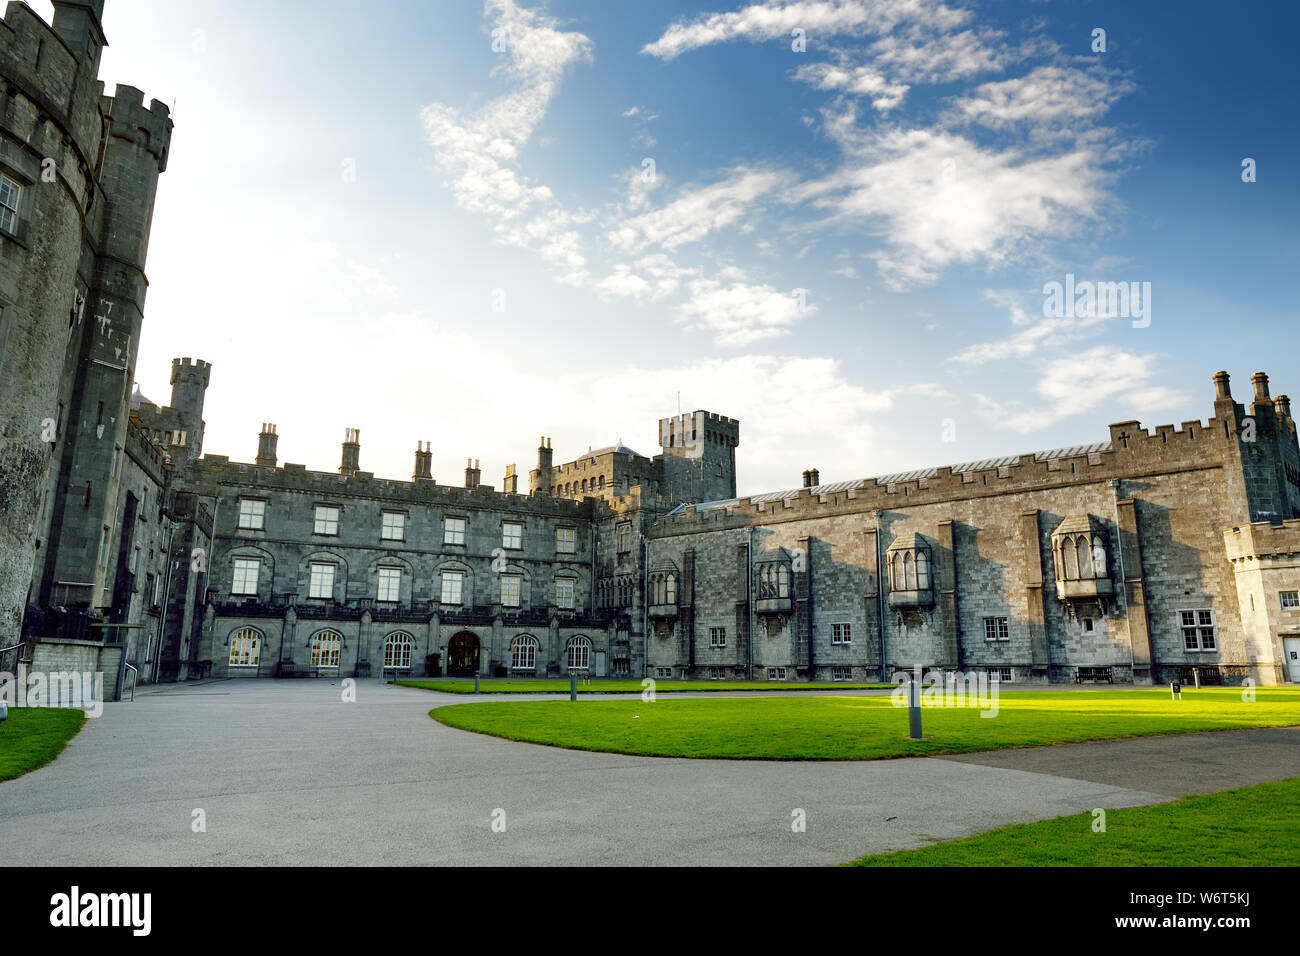 Main facade of Kilkenny Castle, a historic landmark in the town of Kilkenny, Ireland. Stock Photo